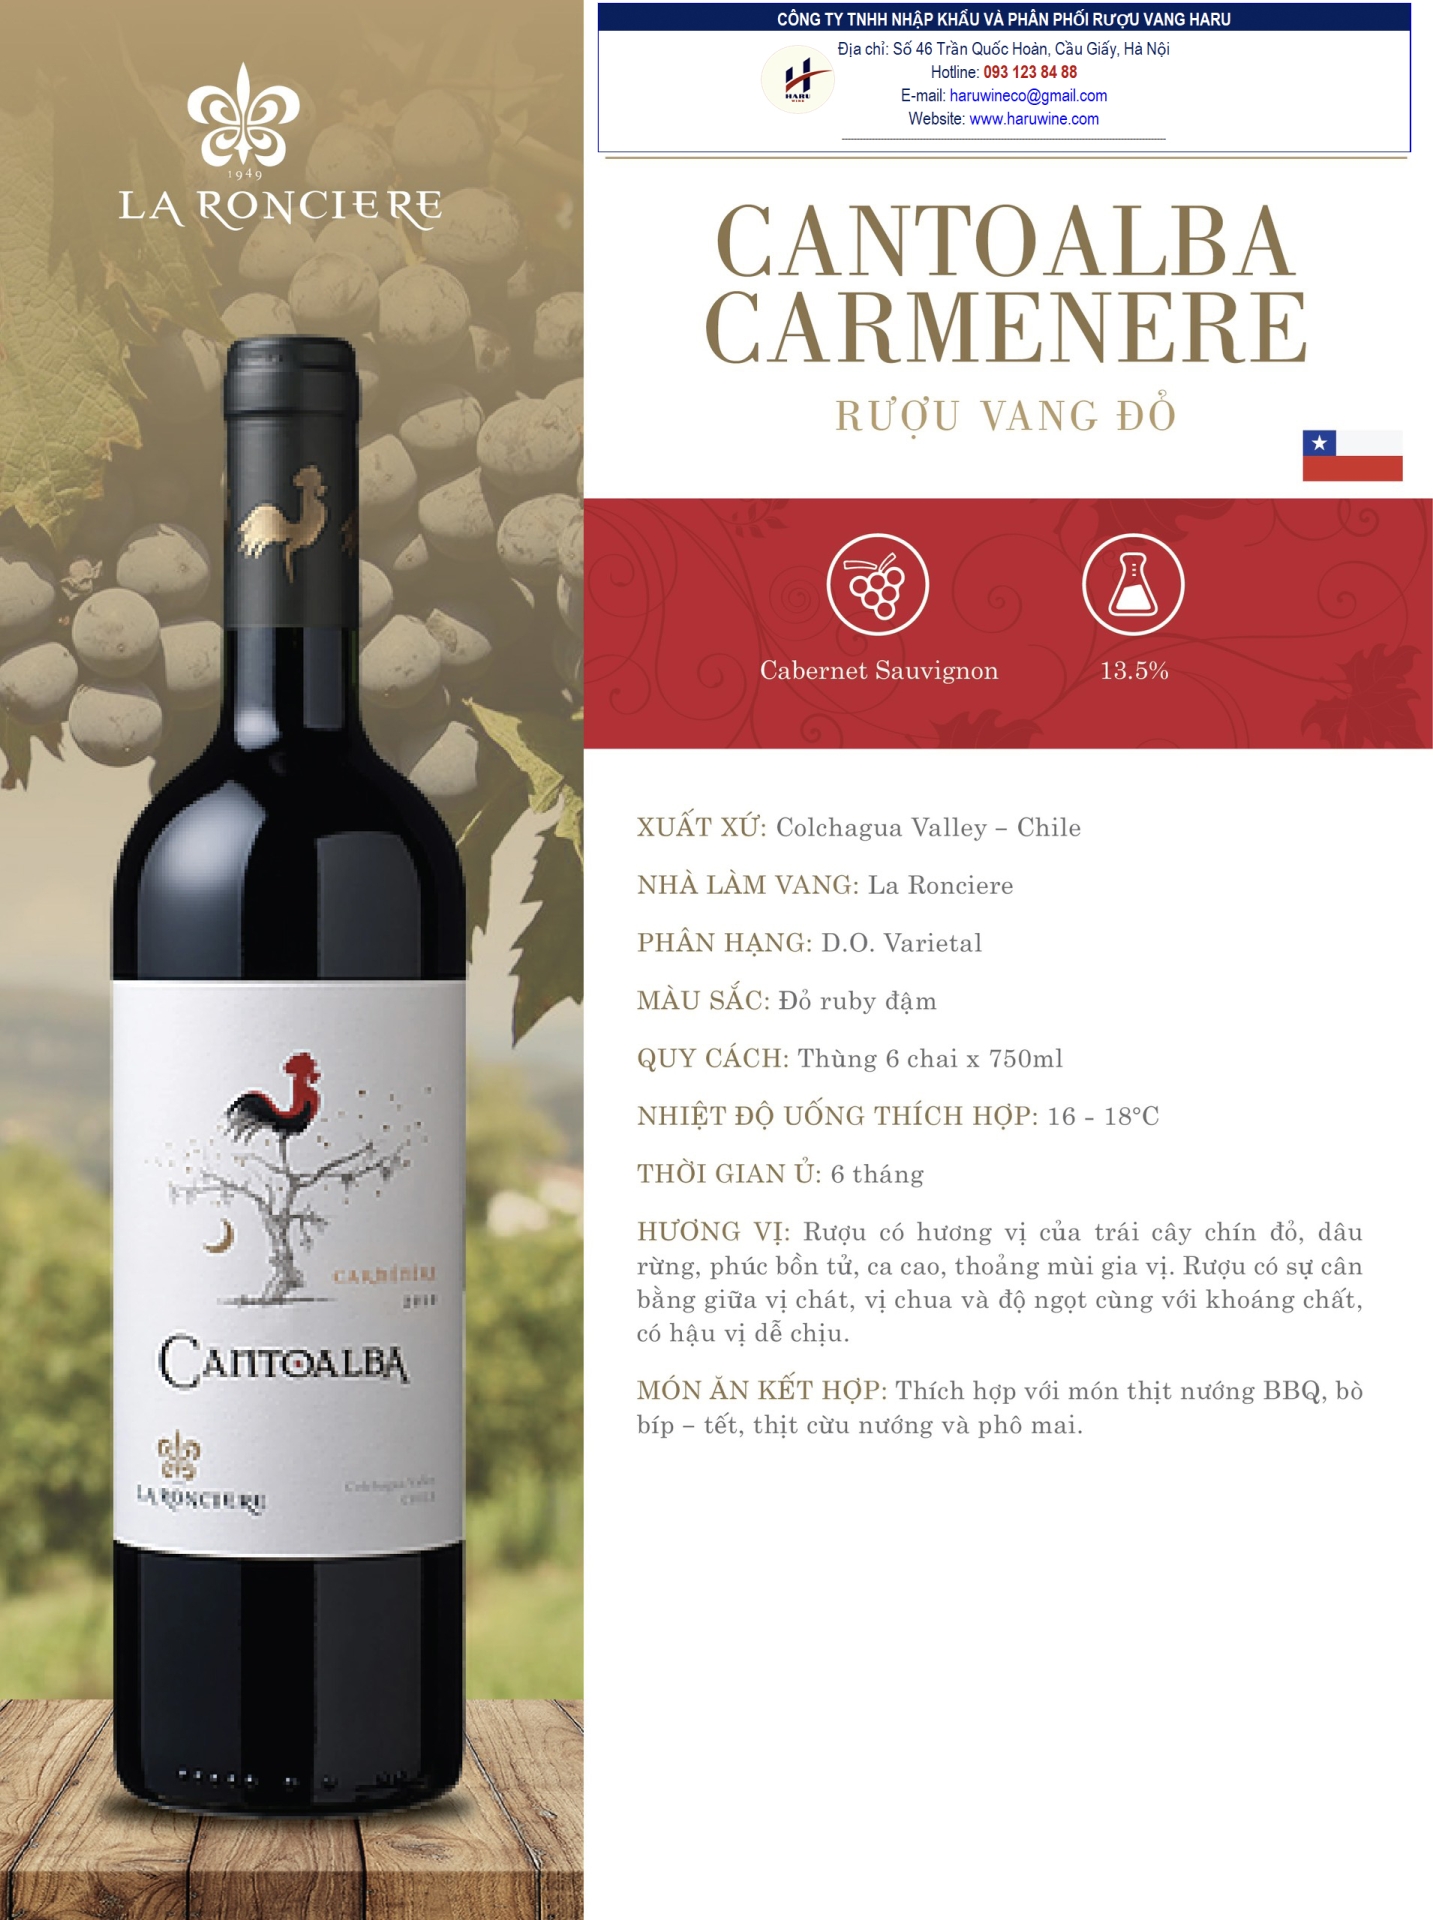 Rượu vang đỏ Cantoalba carmenere